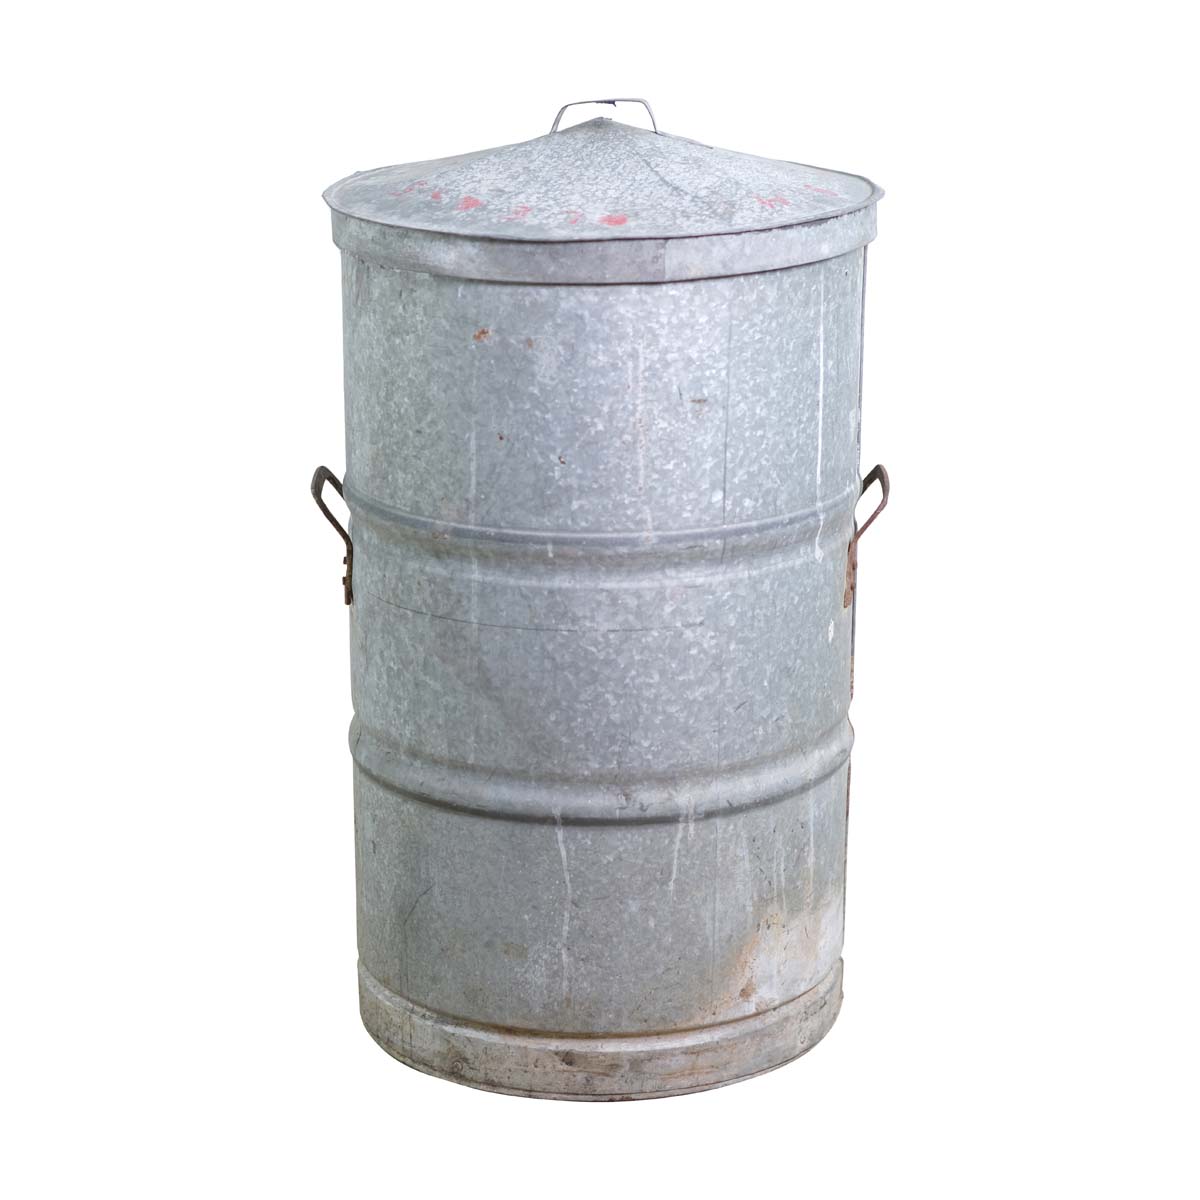 https://ogtstore.com/wp-content/uploads/2023/02/barrels-crates-galvanized-steel-trash-barrel-with-handles-lid-q278815.jpg